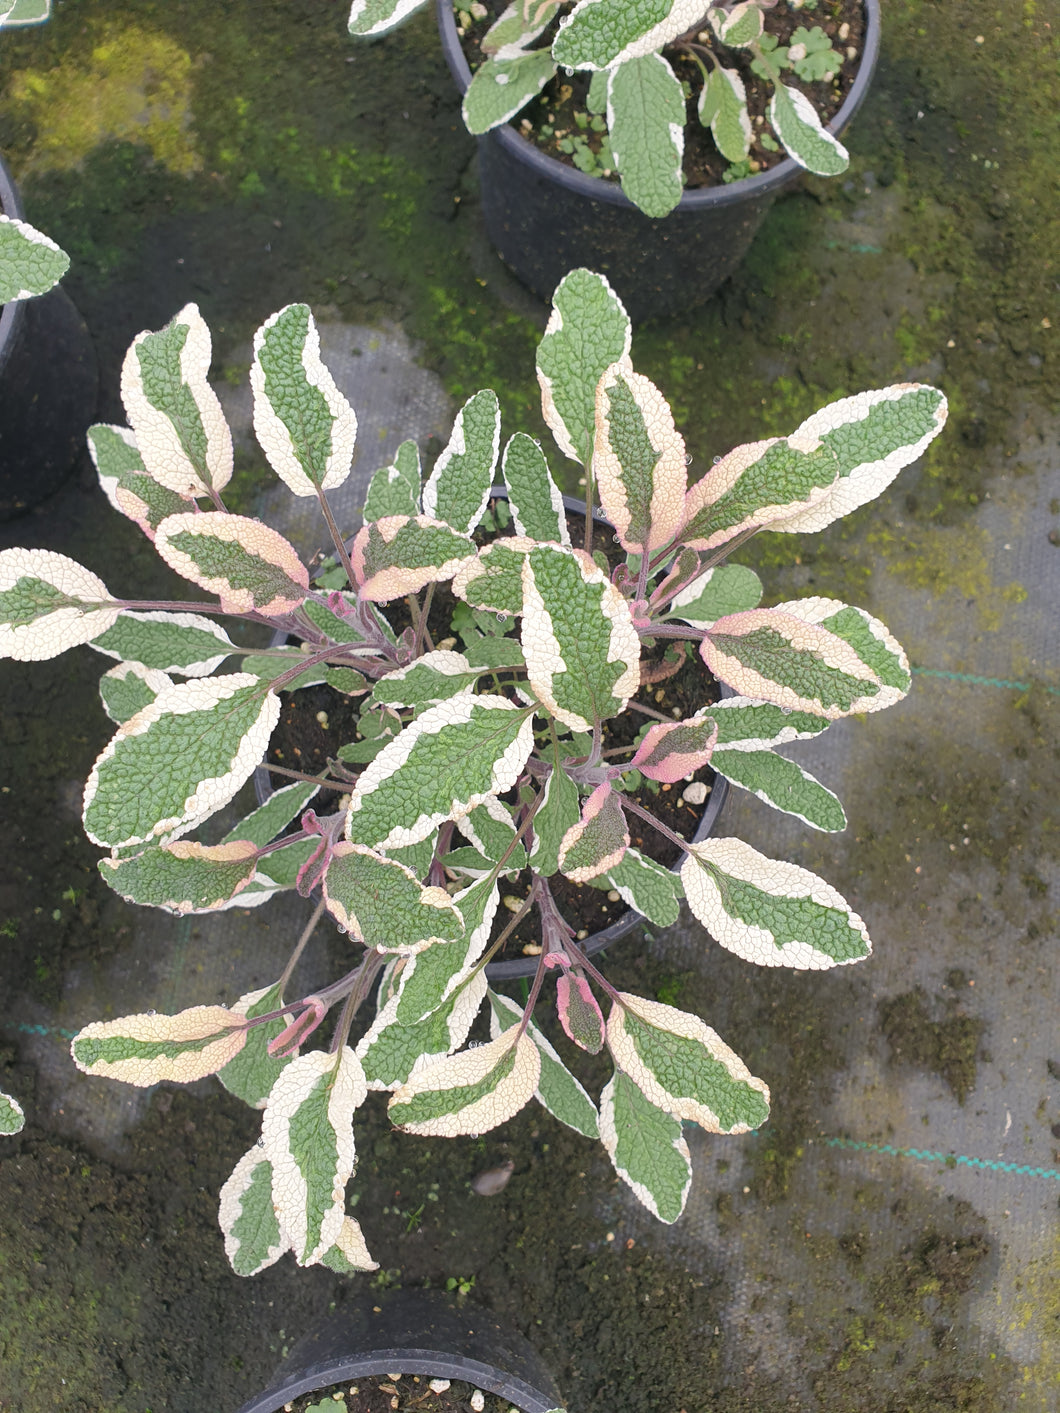 Salvia officinalis purpura